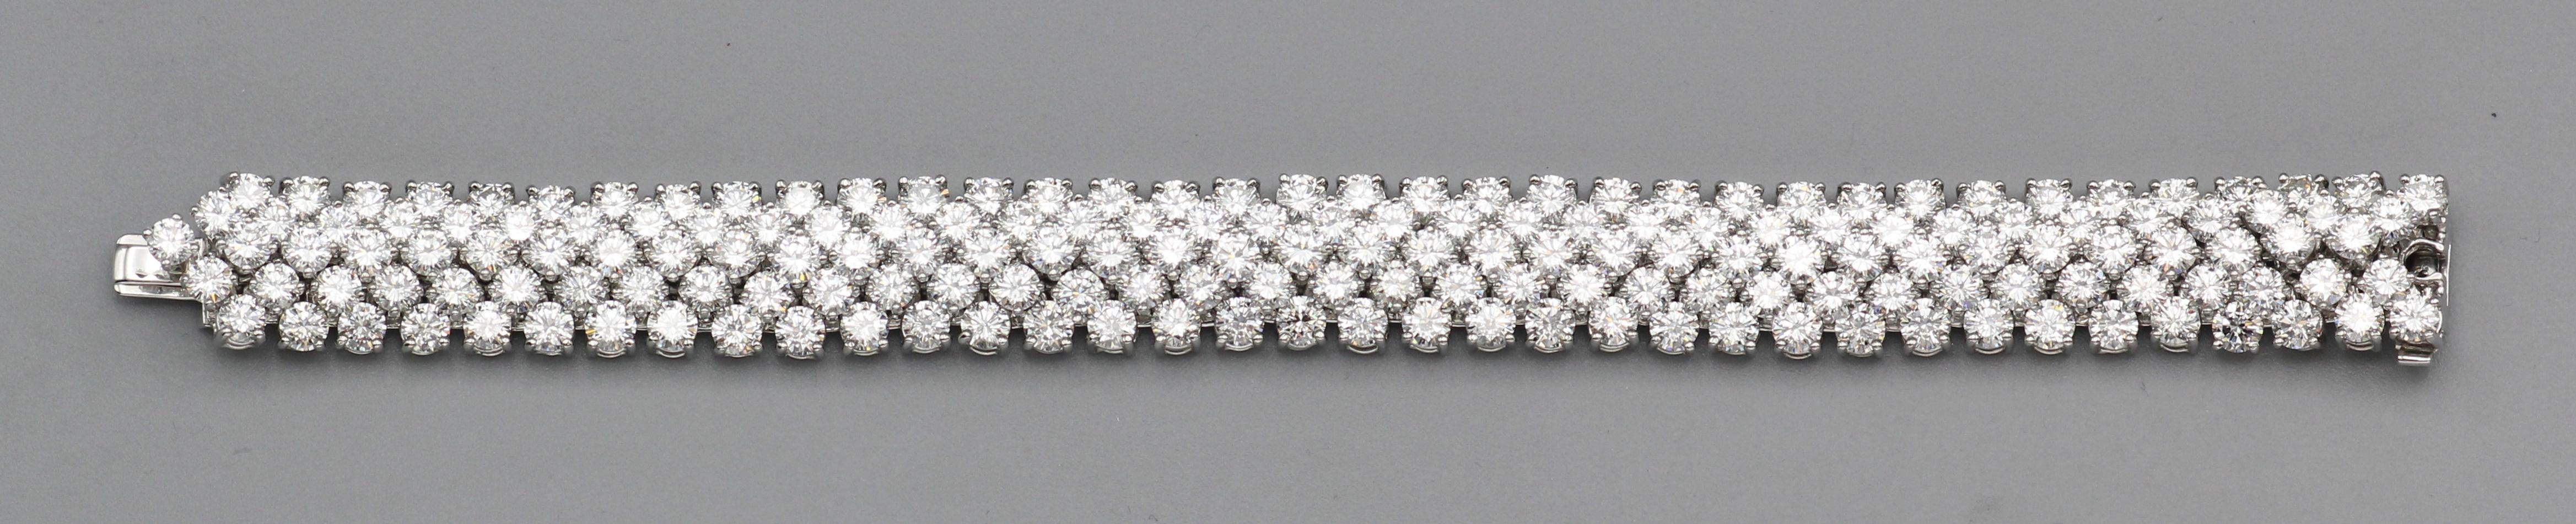 Hammerman Brothers Flexible Diamond Platinum 5 Row Strap Bracelet For Sale 1